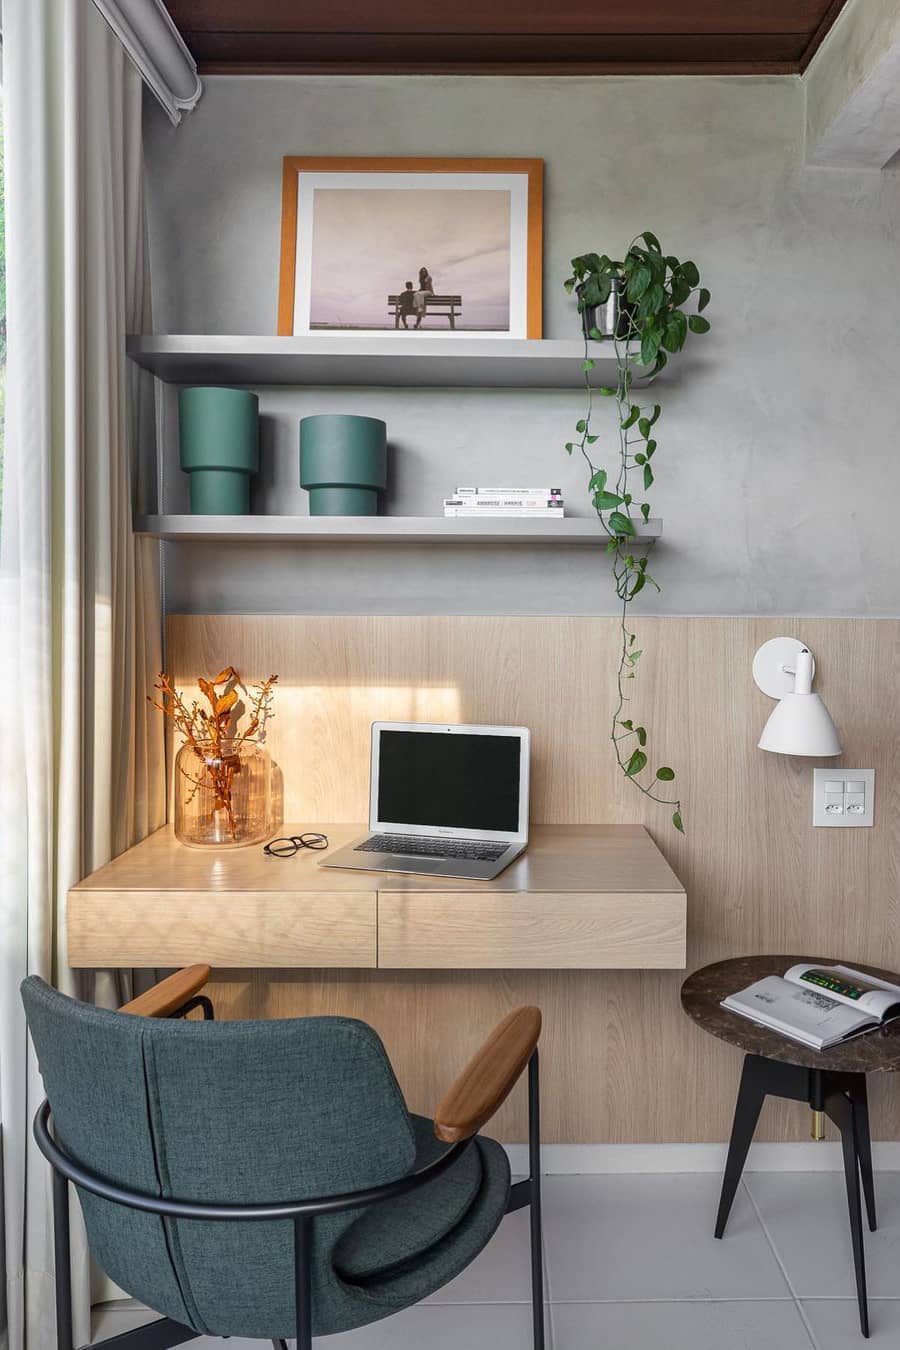 25 Inspiring Decor Ideas For Home Office Walls